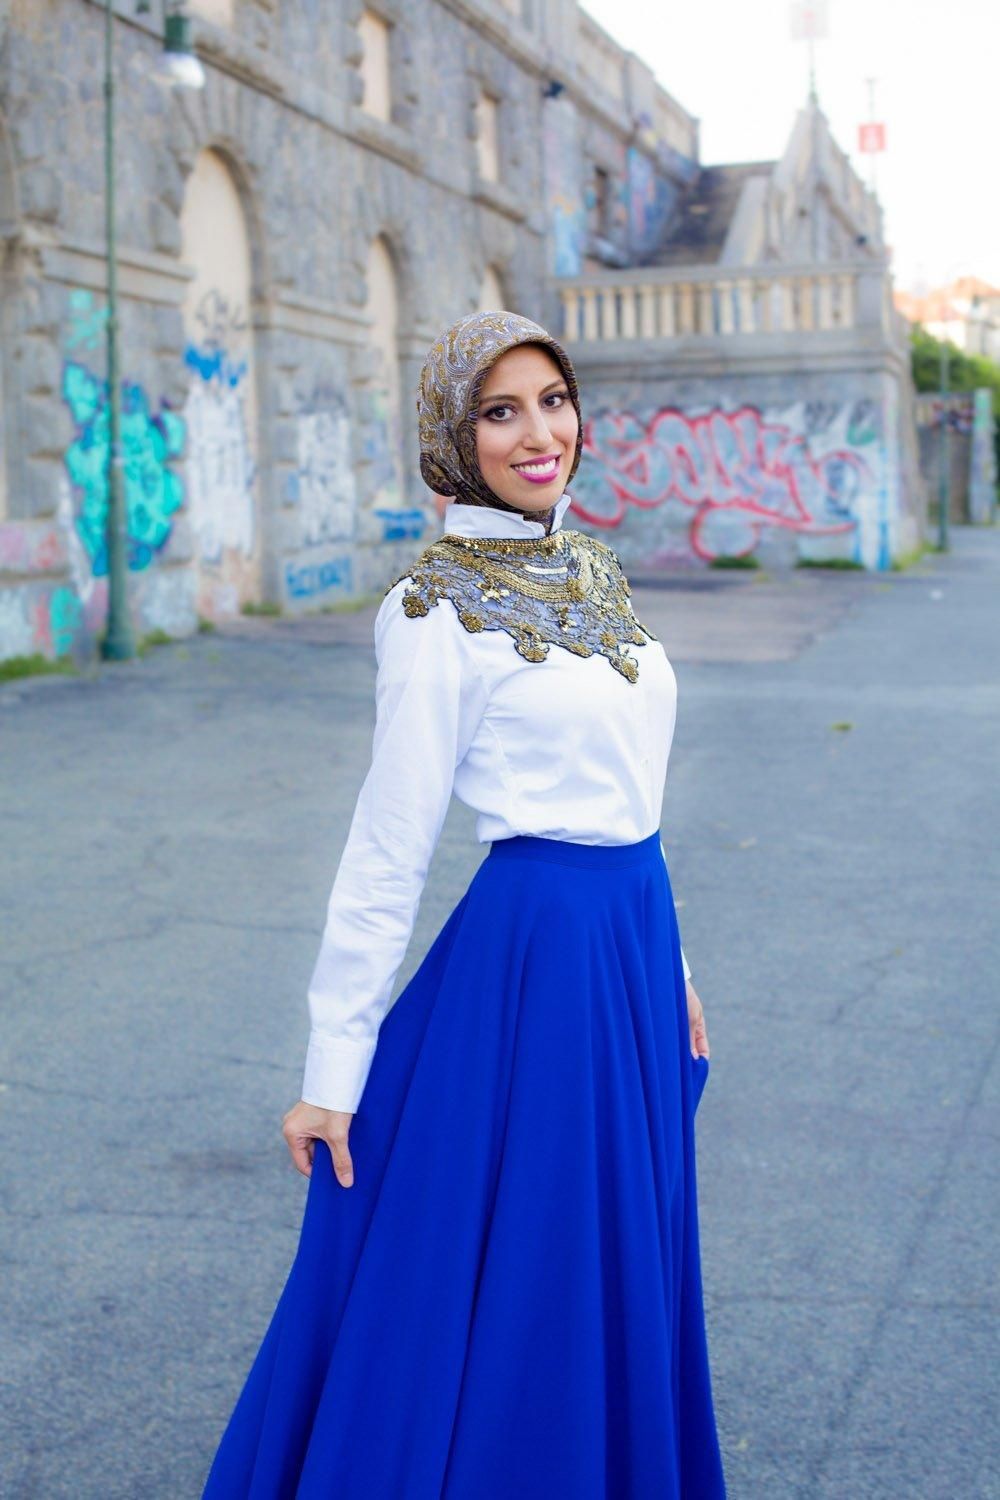 30 Latest Eid Hijab Styles With Eid Dresses-2019 Eid Fashion - 30 Latest Eid Hijab Styles With Eid Dresses-2019 Eid Fashion -   10 style Guides hijab ideas